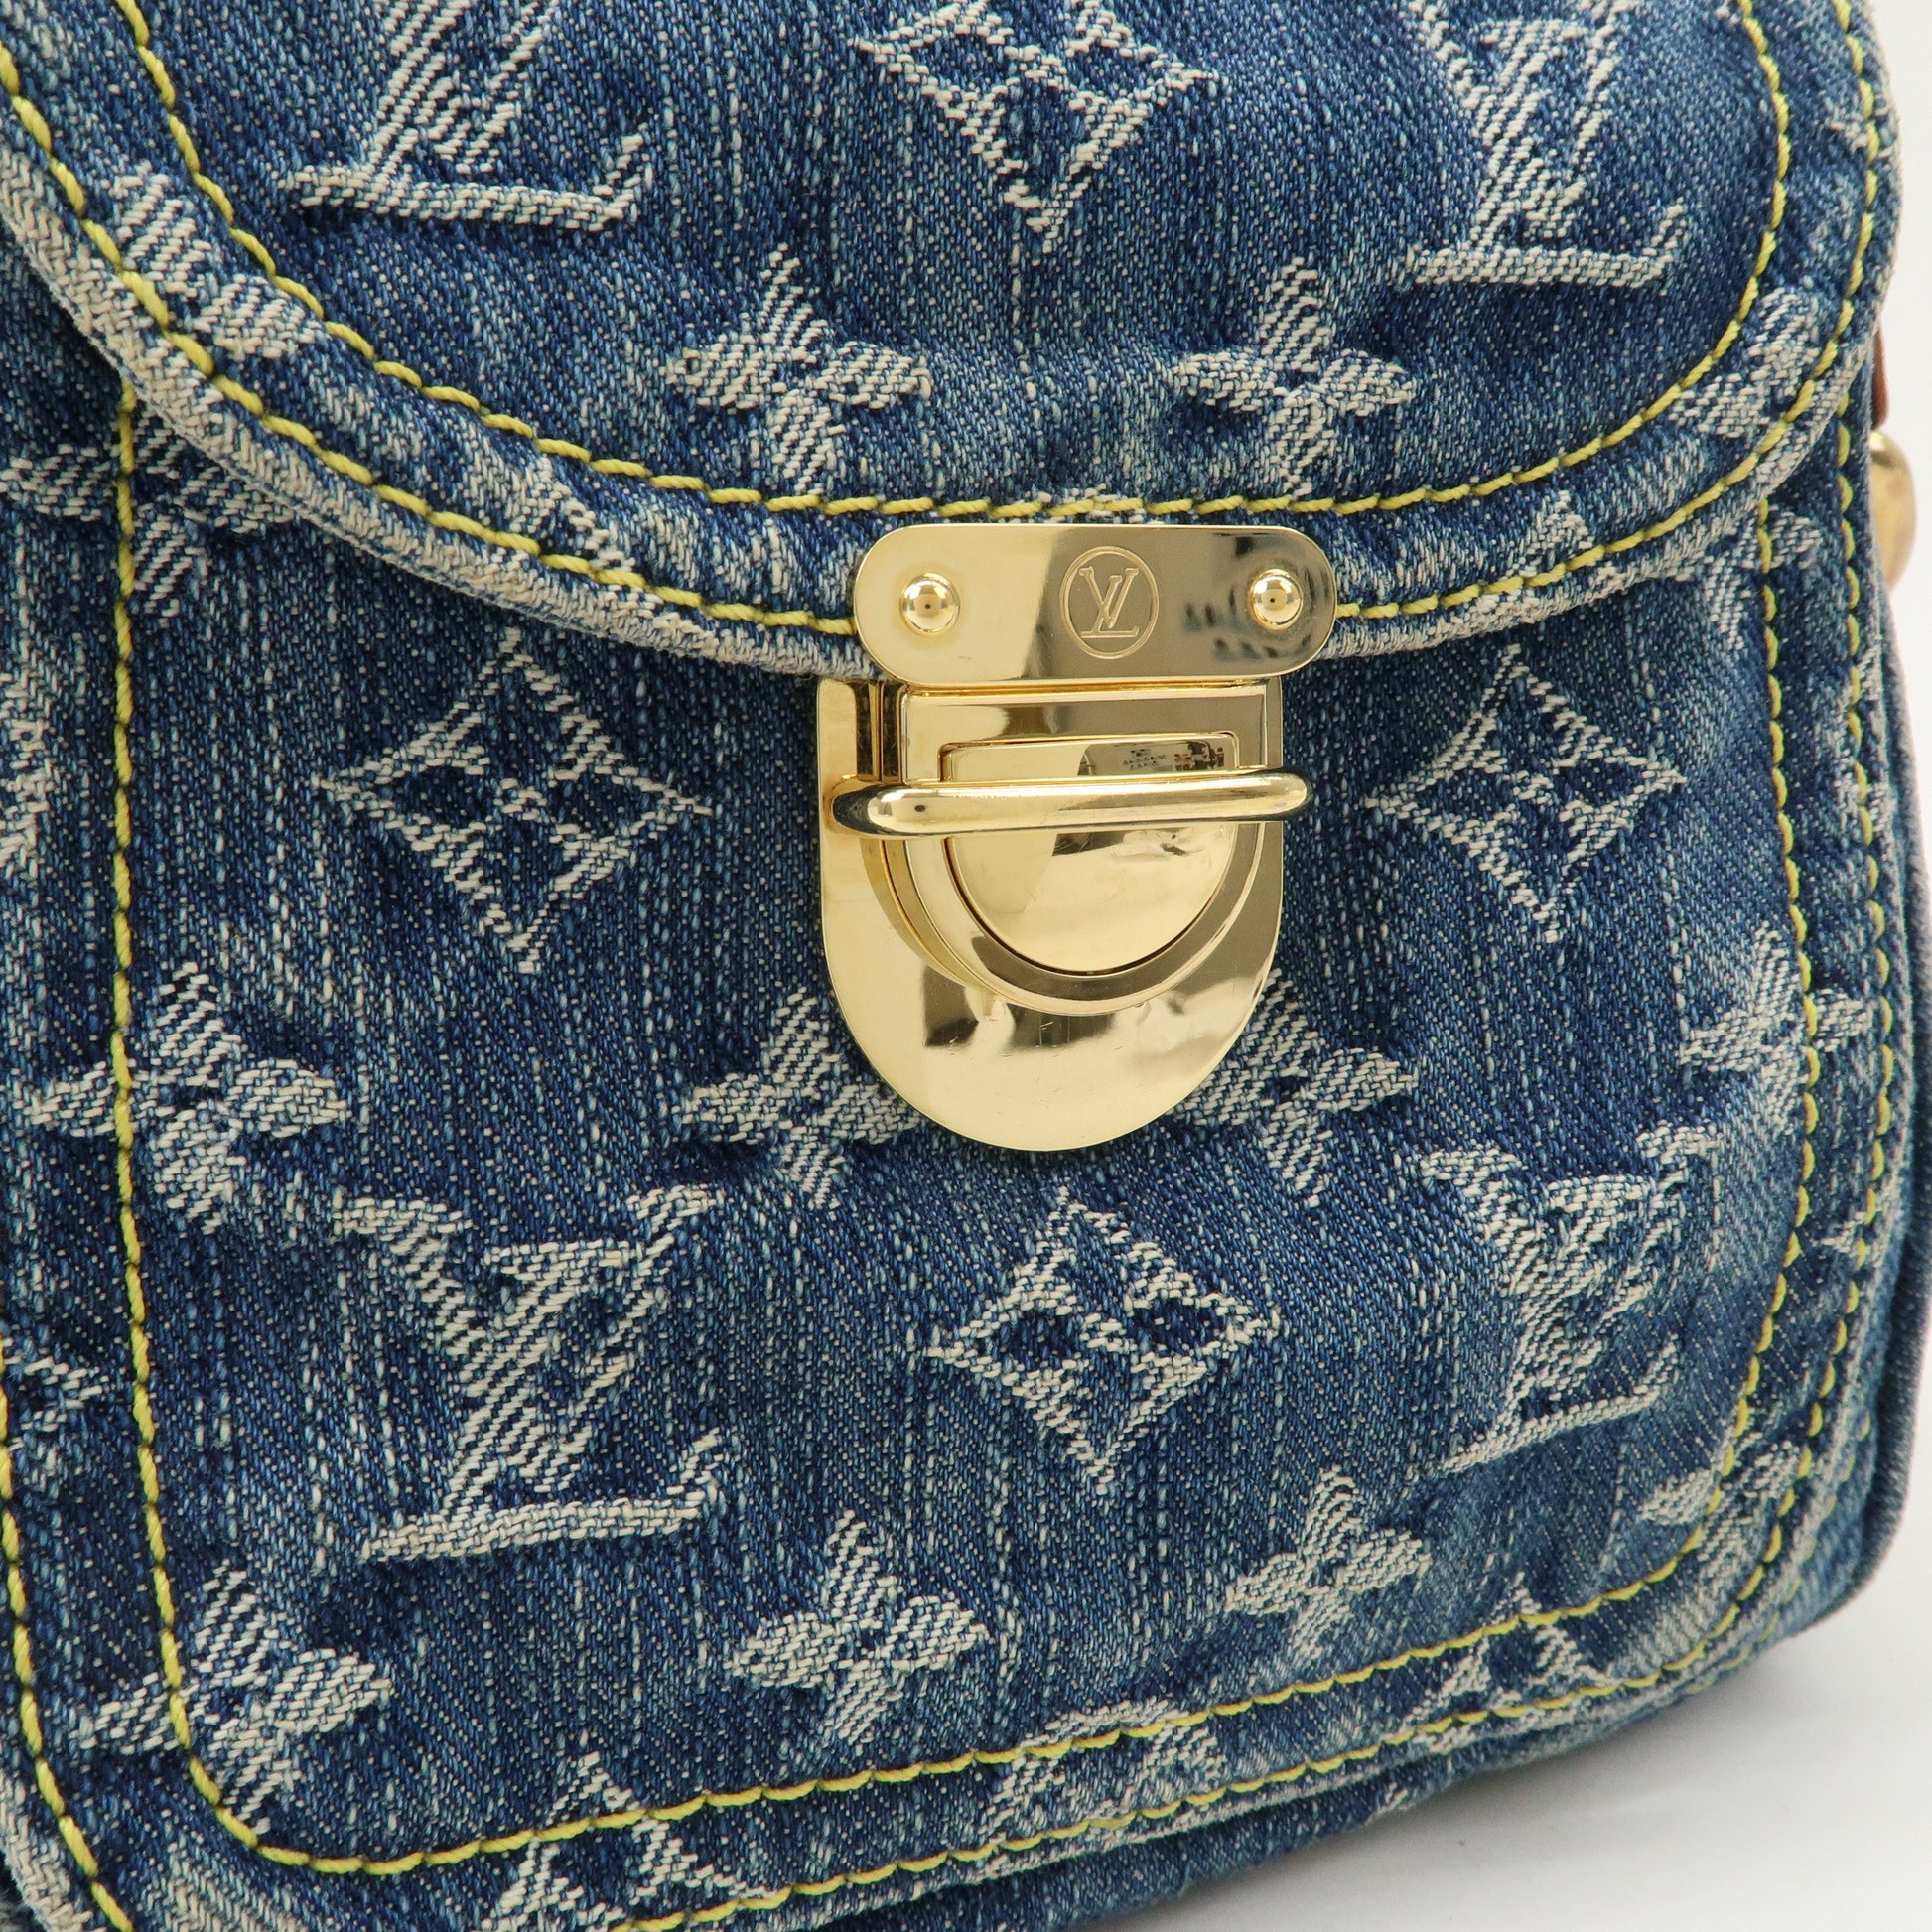 Louis Vuitton Blue Monogram Denim Camera Bag Louis Vuitton